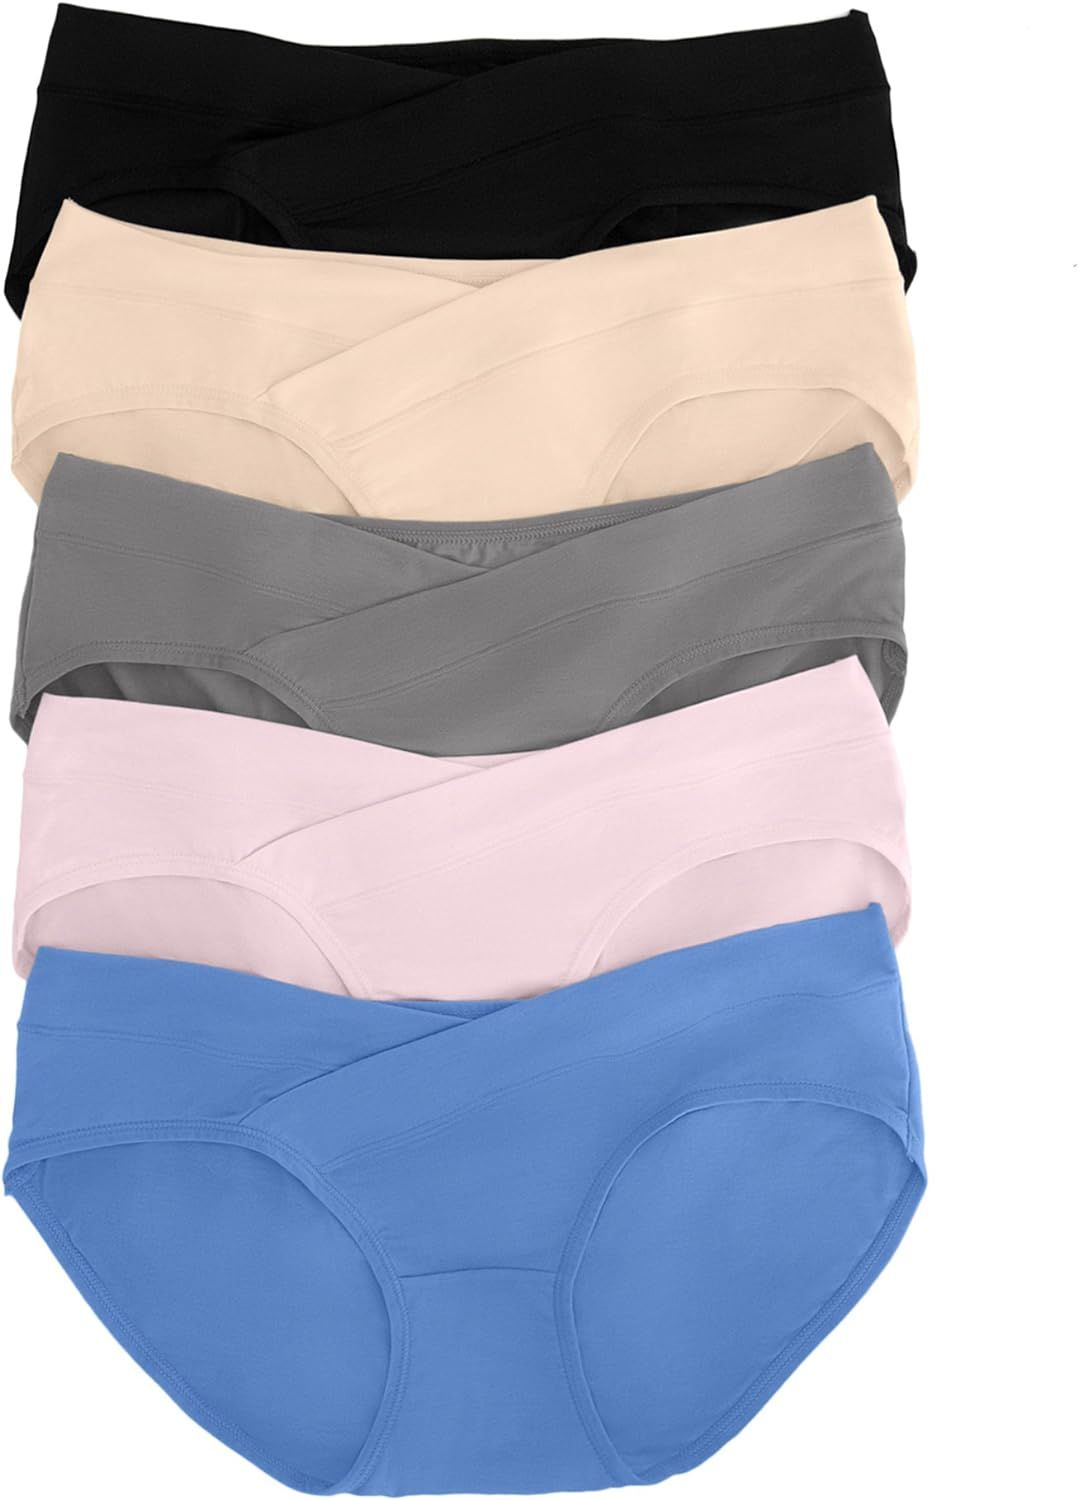 Kindred Bravely Under the Bump Maternity Underwear/Pregnancy Panties - Bikini 5 Pack | Amazon (US)